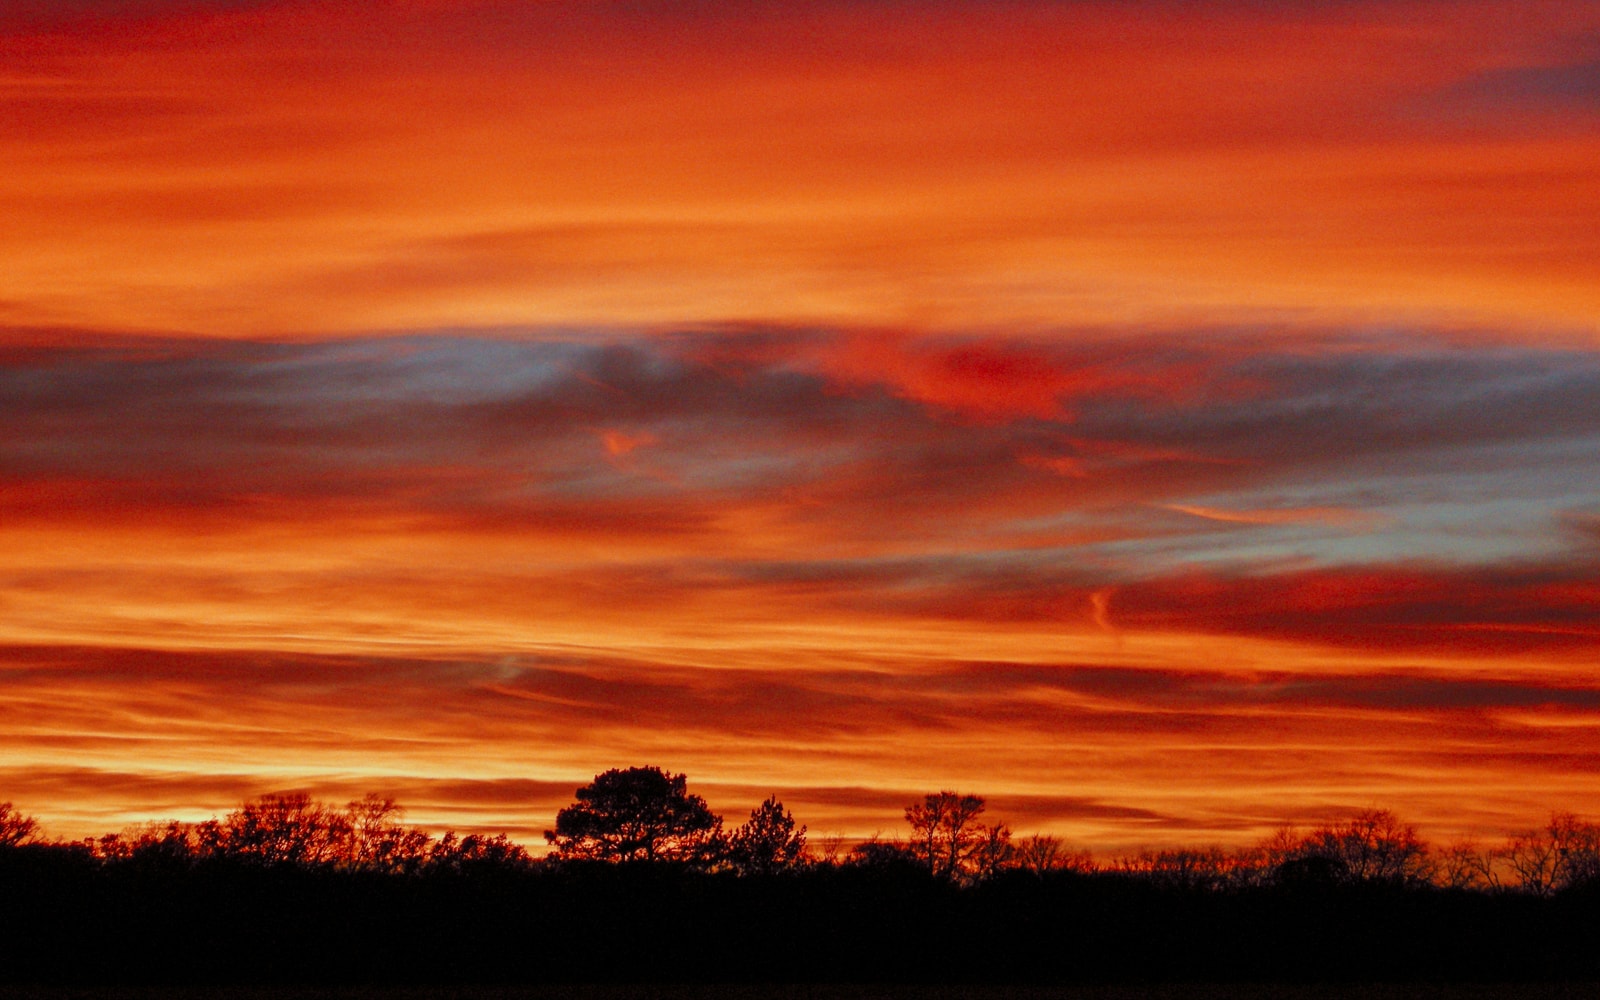 A beautiful fire orange sunset in East Texas